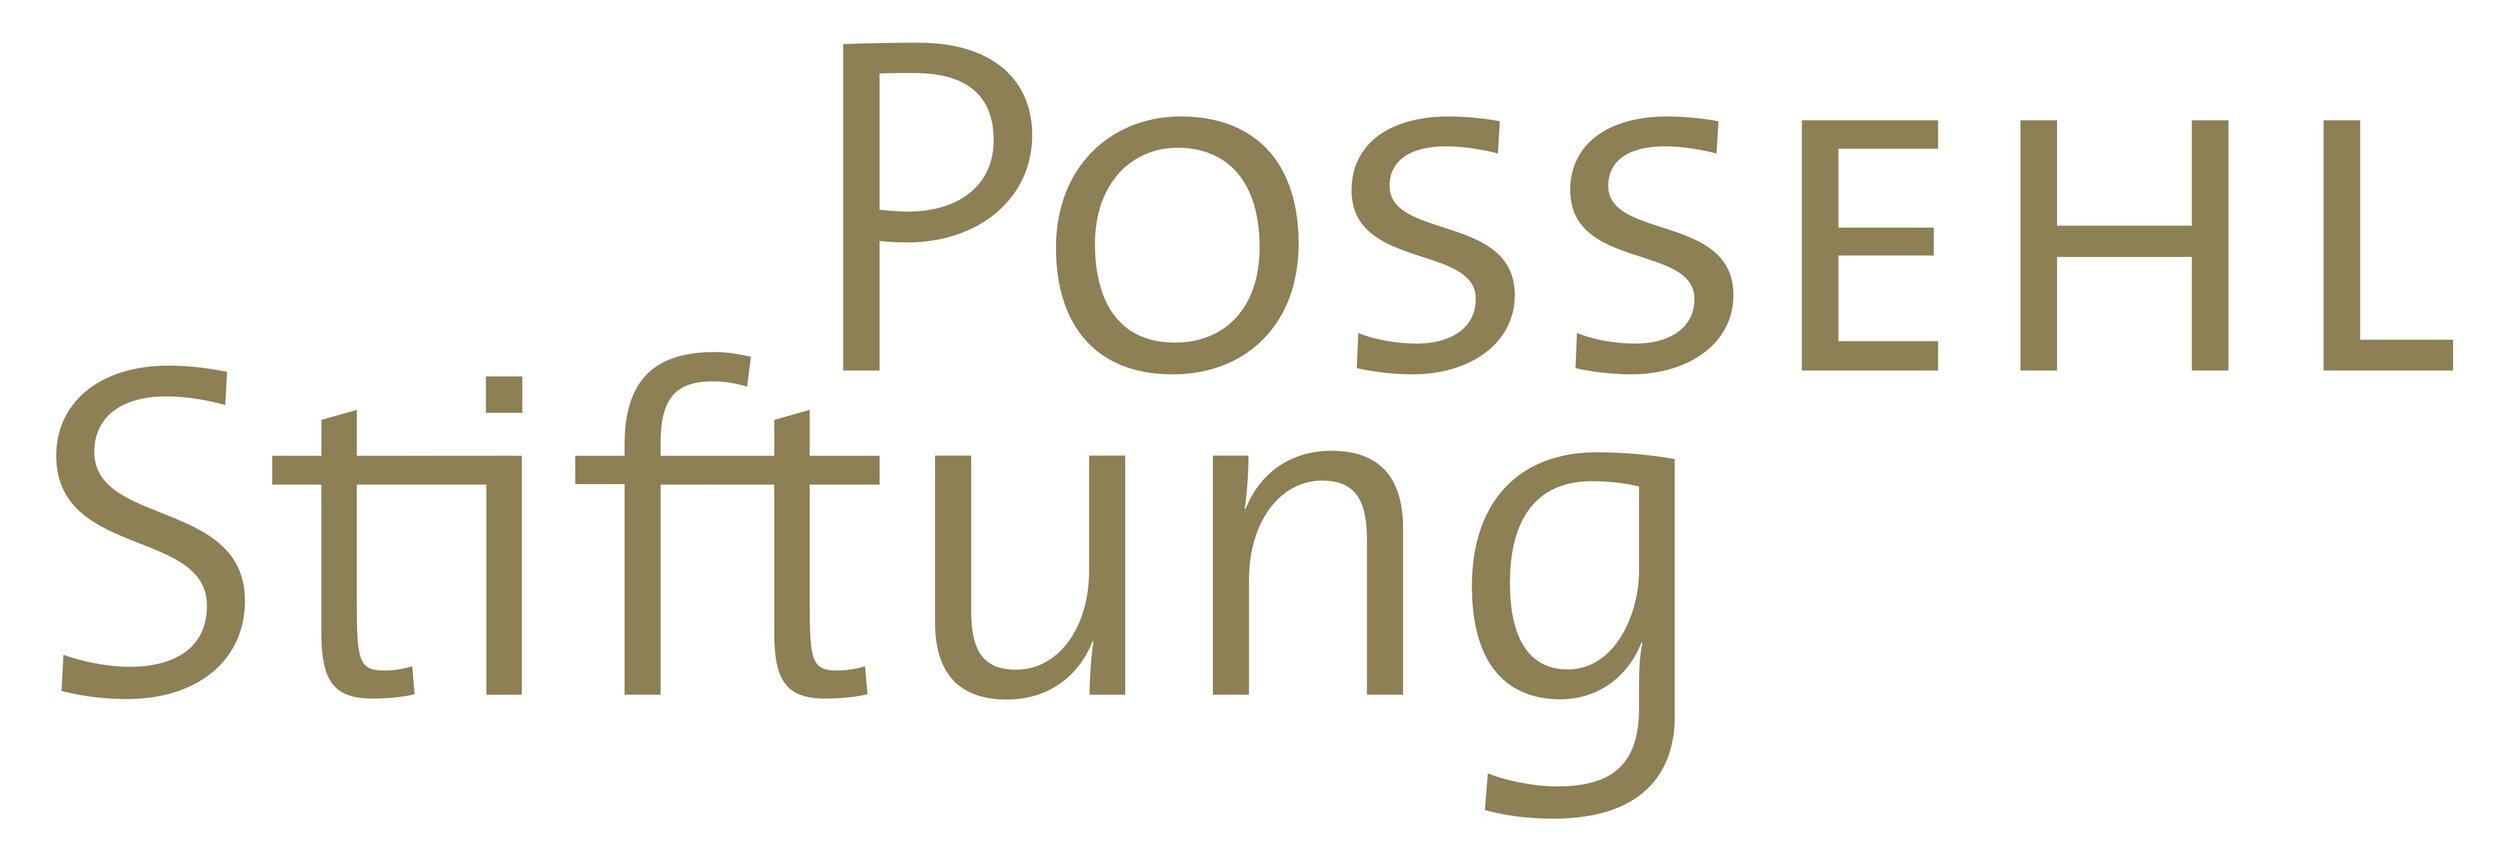 Possehl-Stiftung_Logo_messing jpg.jpg